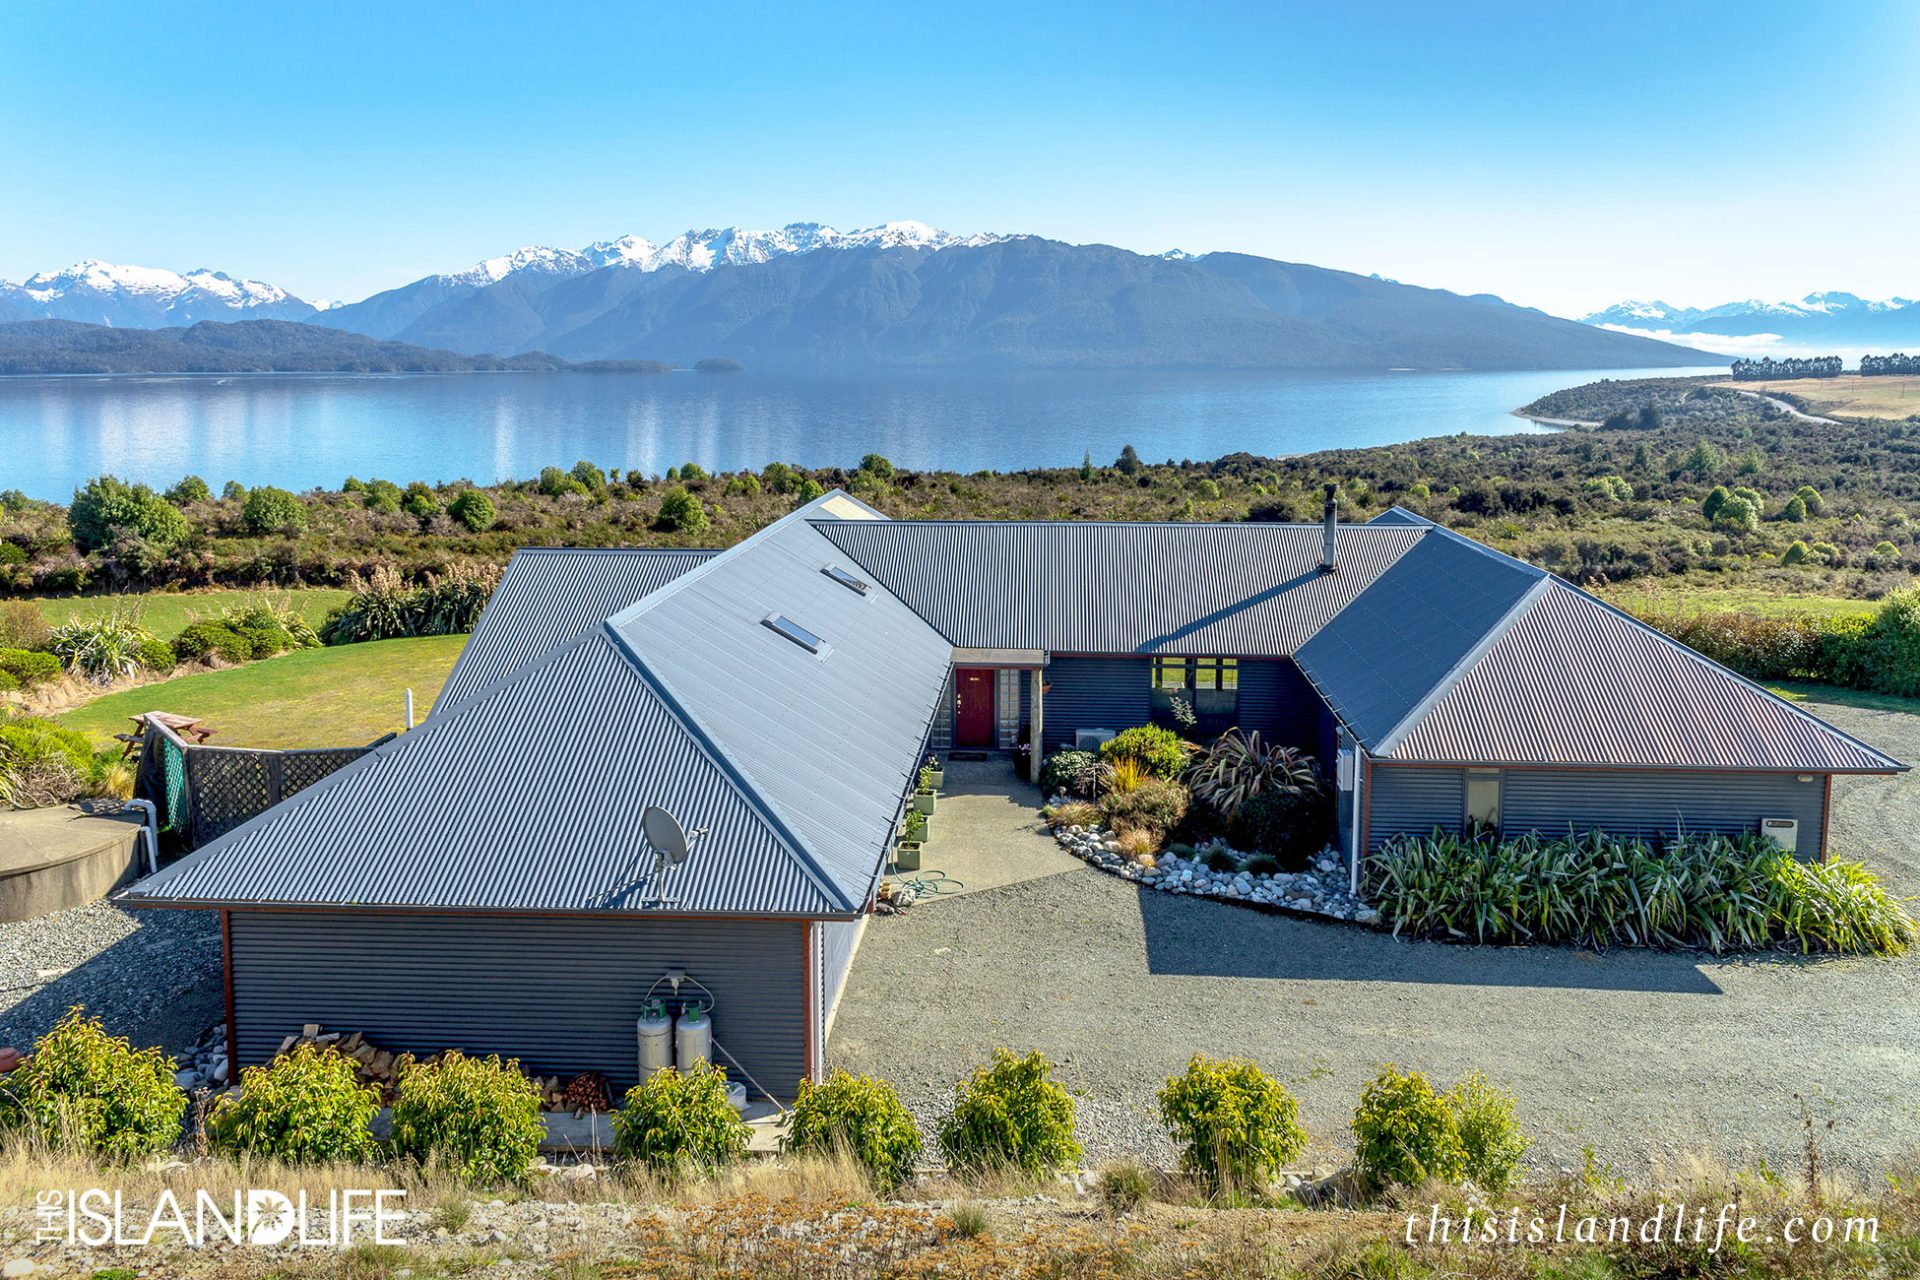 THIS ISLAND LIFE | Loch Vista in Te Anau